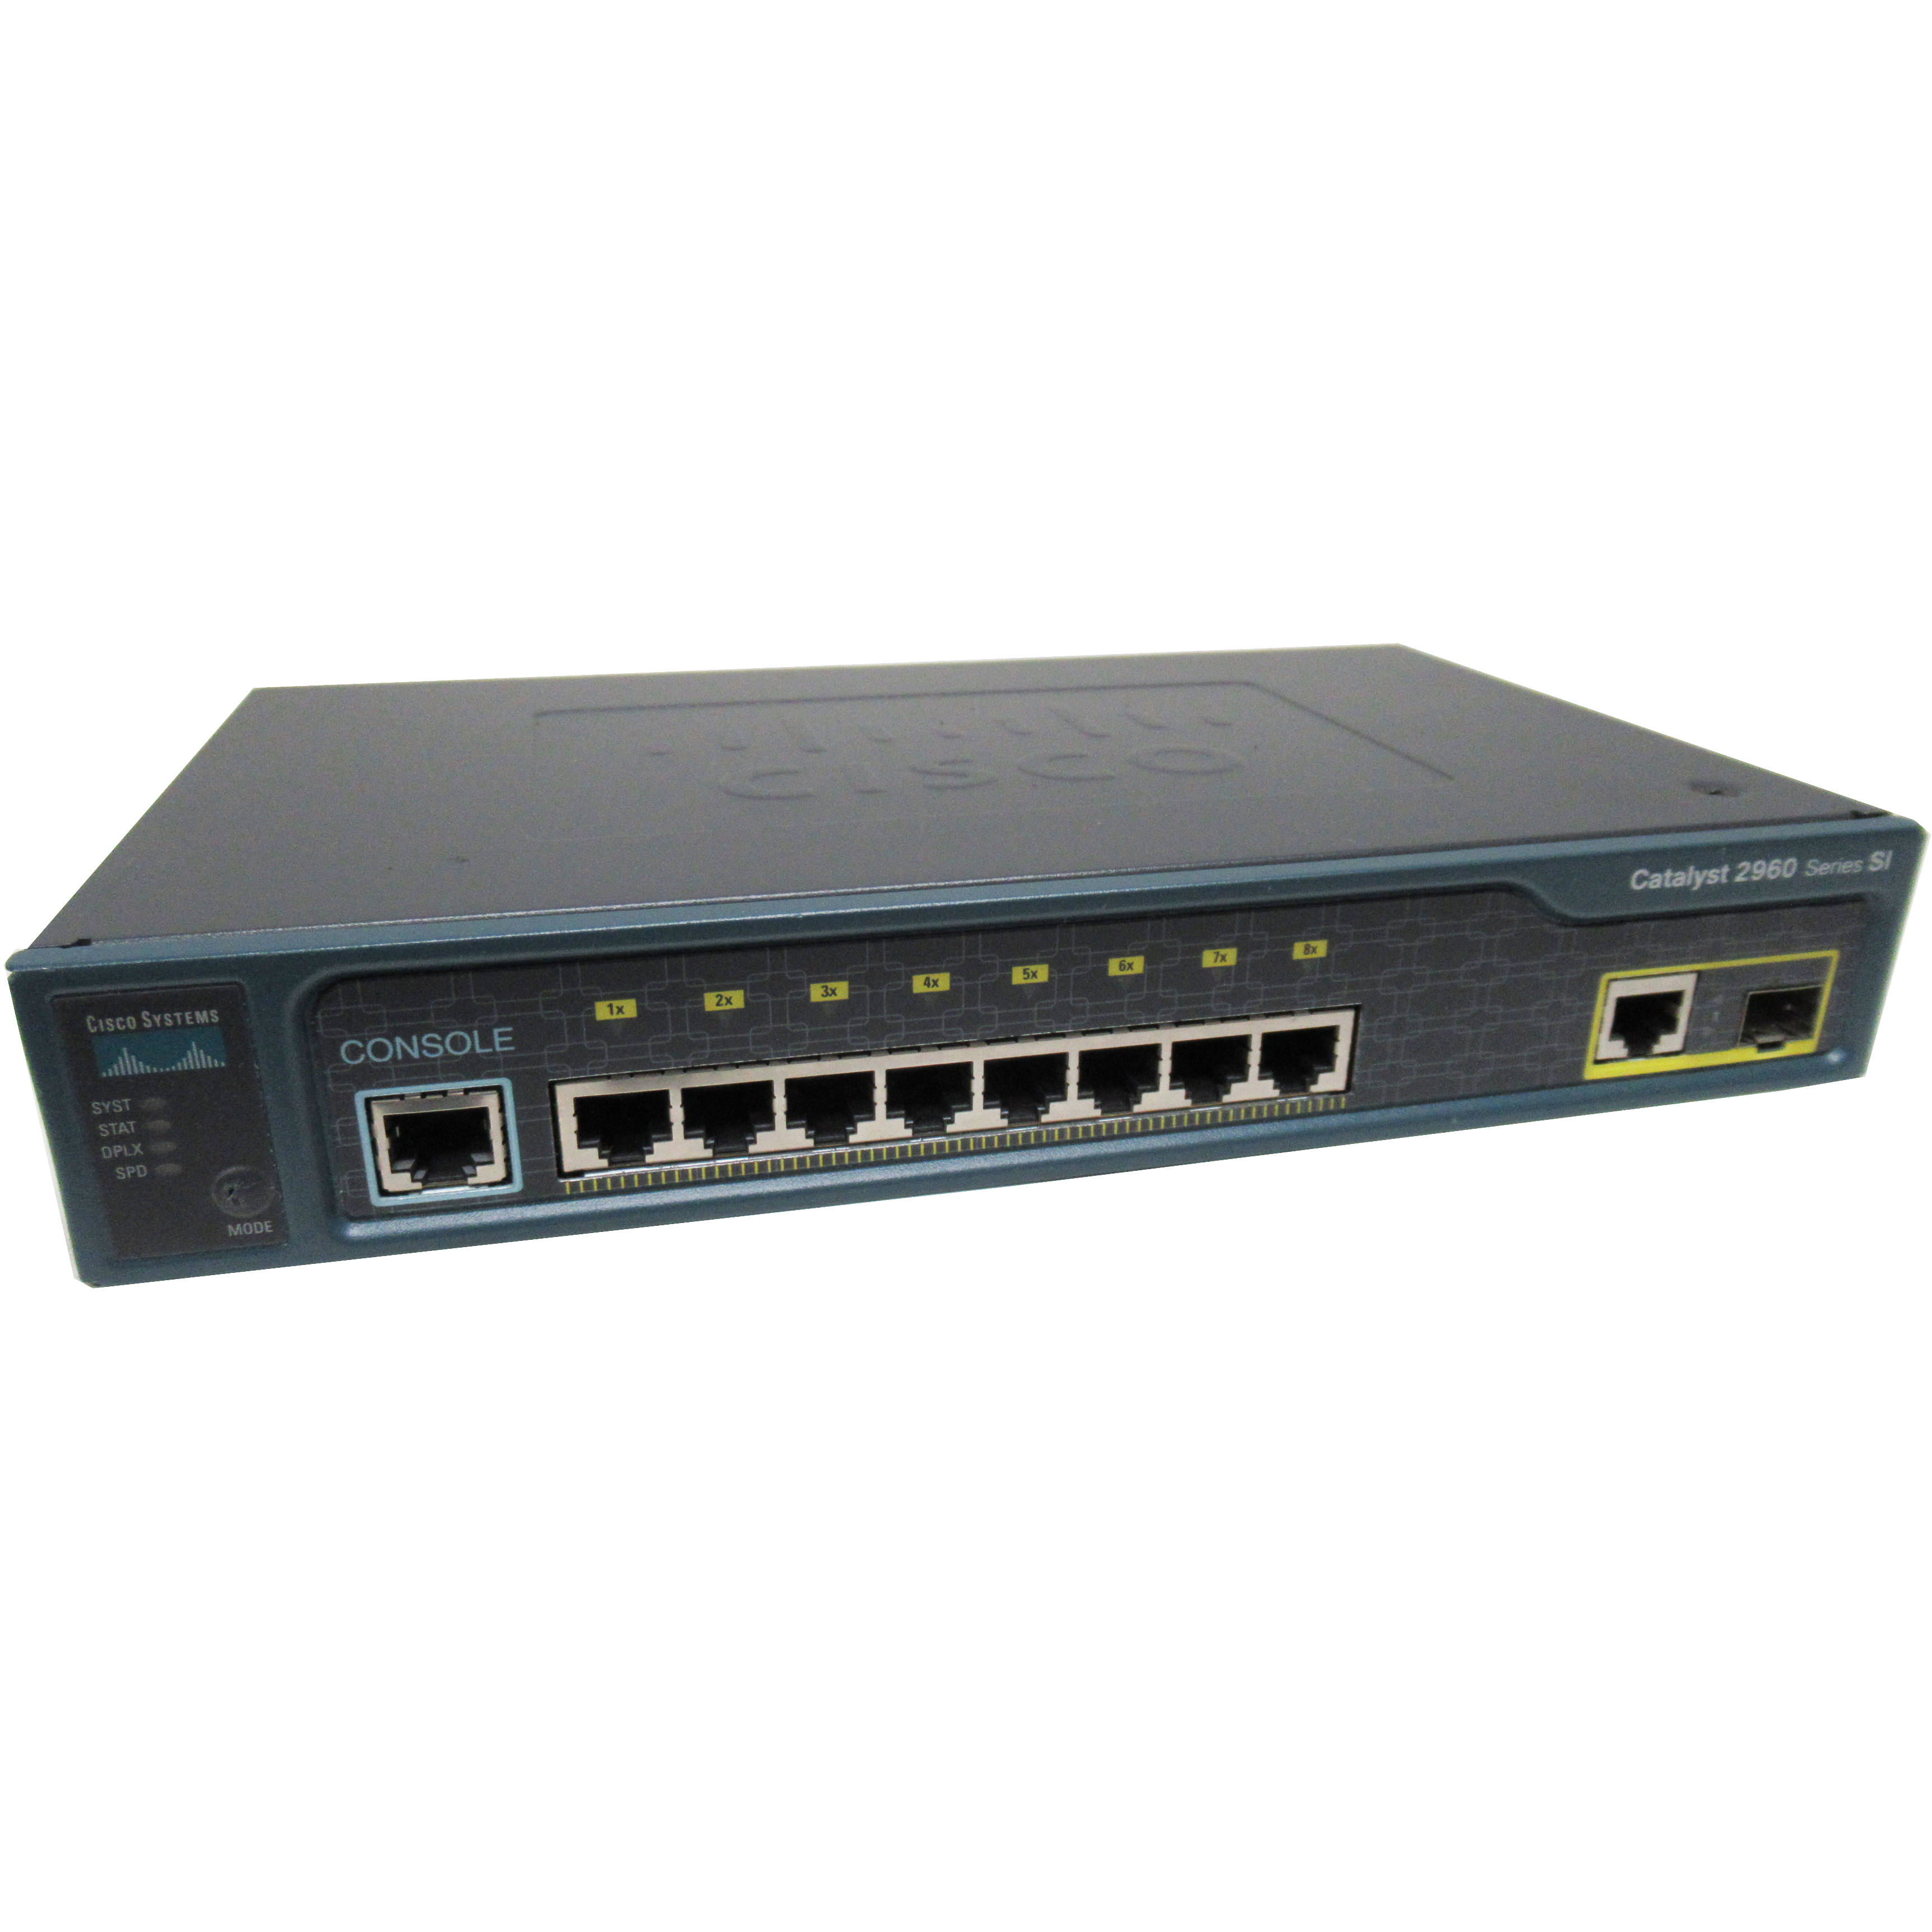 Cisco WS-C2960-8TC-S